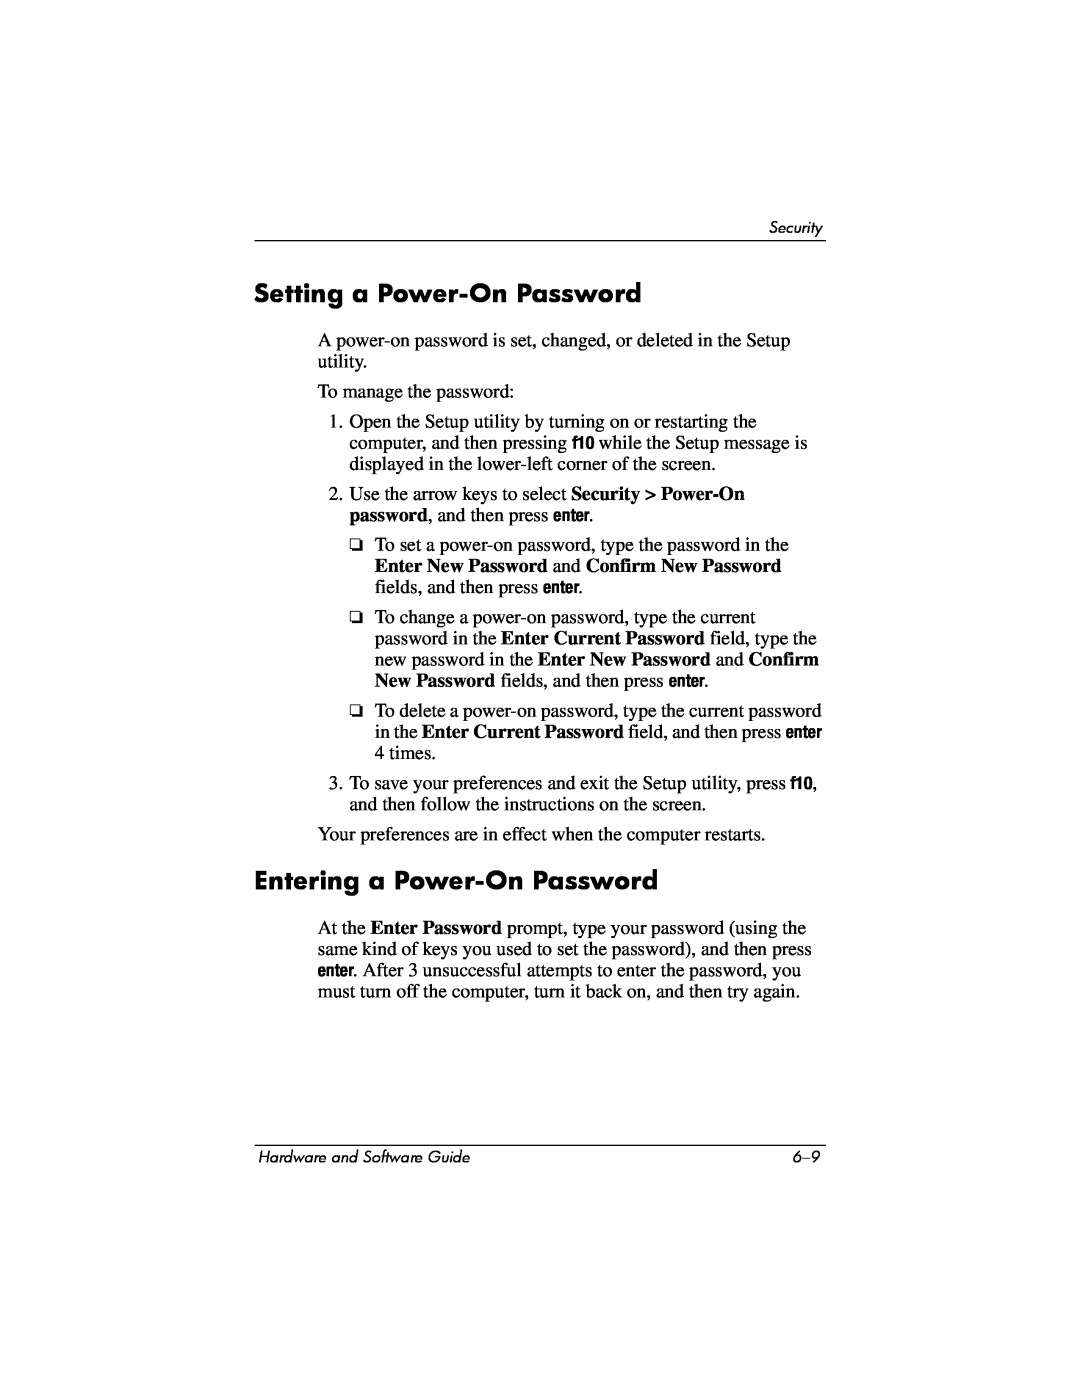 Compaq Presario M2000 manual Setting a Power-On Password, Entering a Power-On Password 